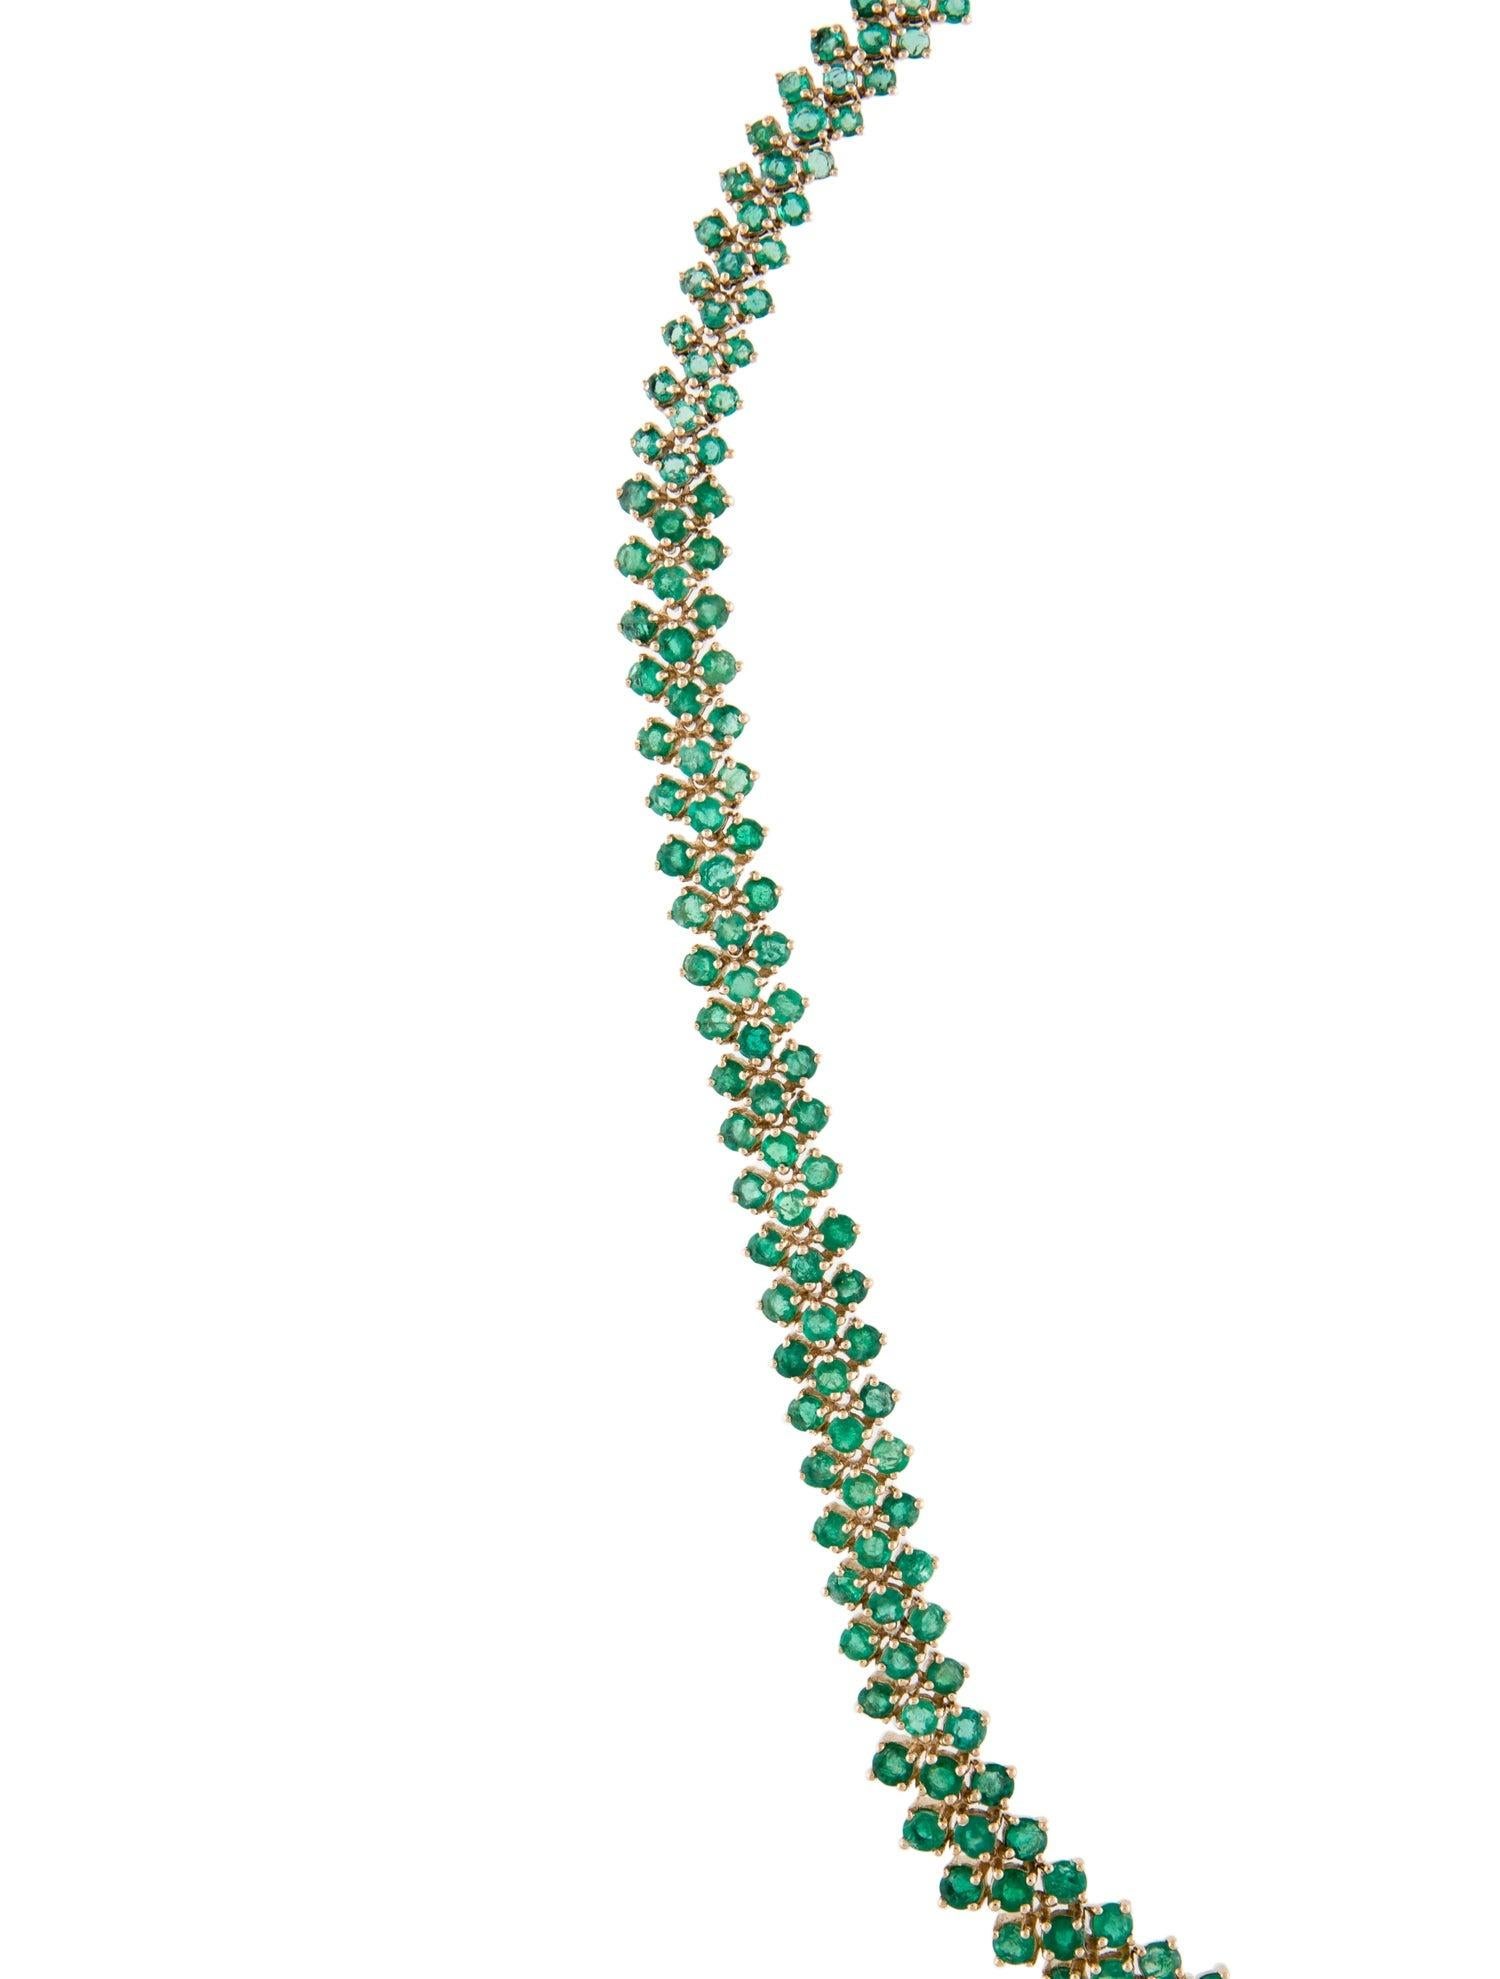 Brilliant Cut 14K Emerald Graduated Collar Necklace: Exquisite Luxury Statement Jewelry Piece For Sale